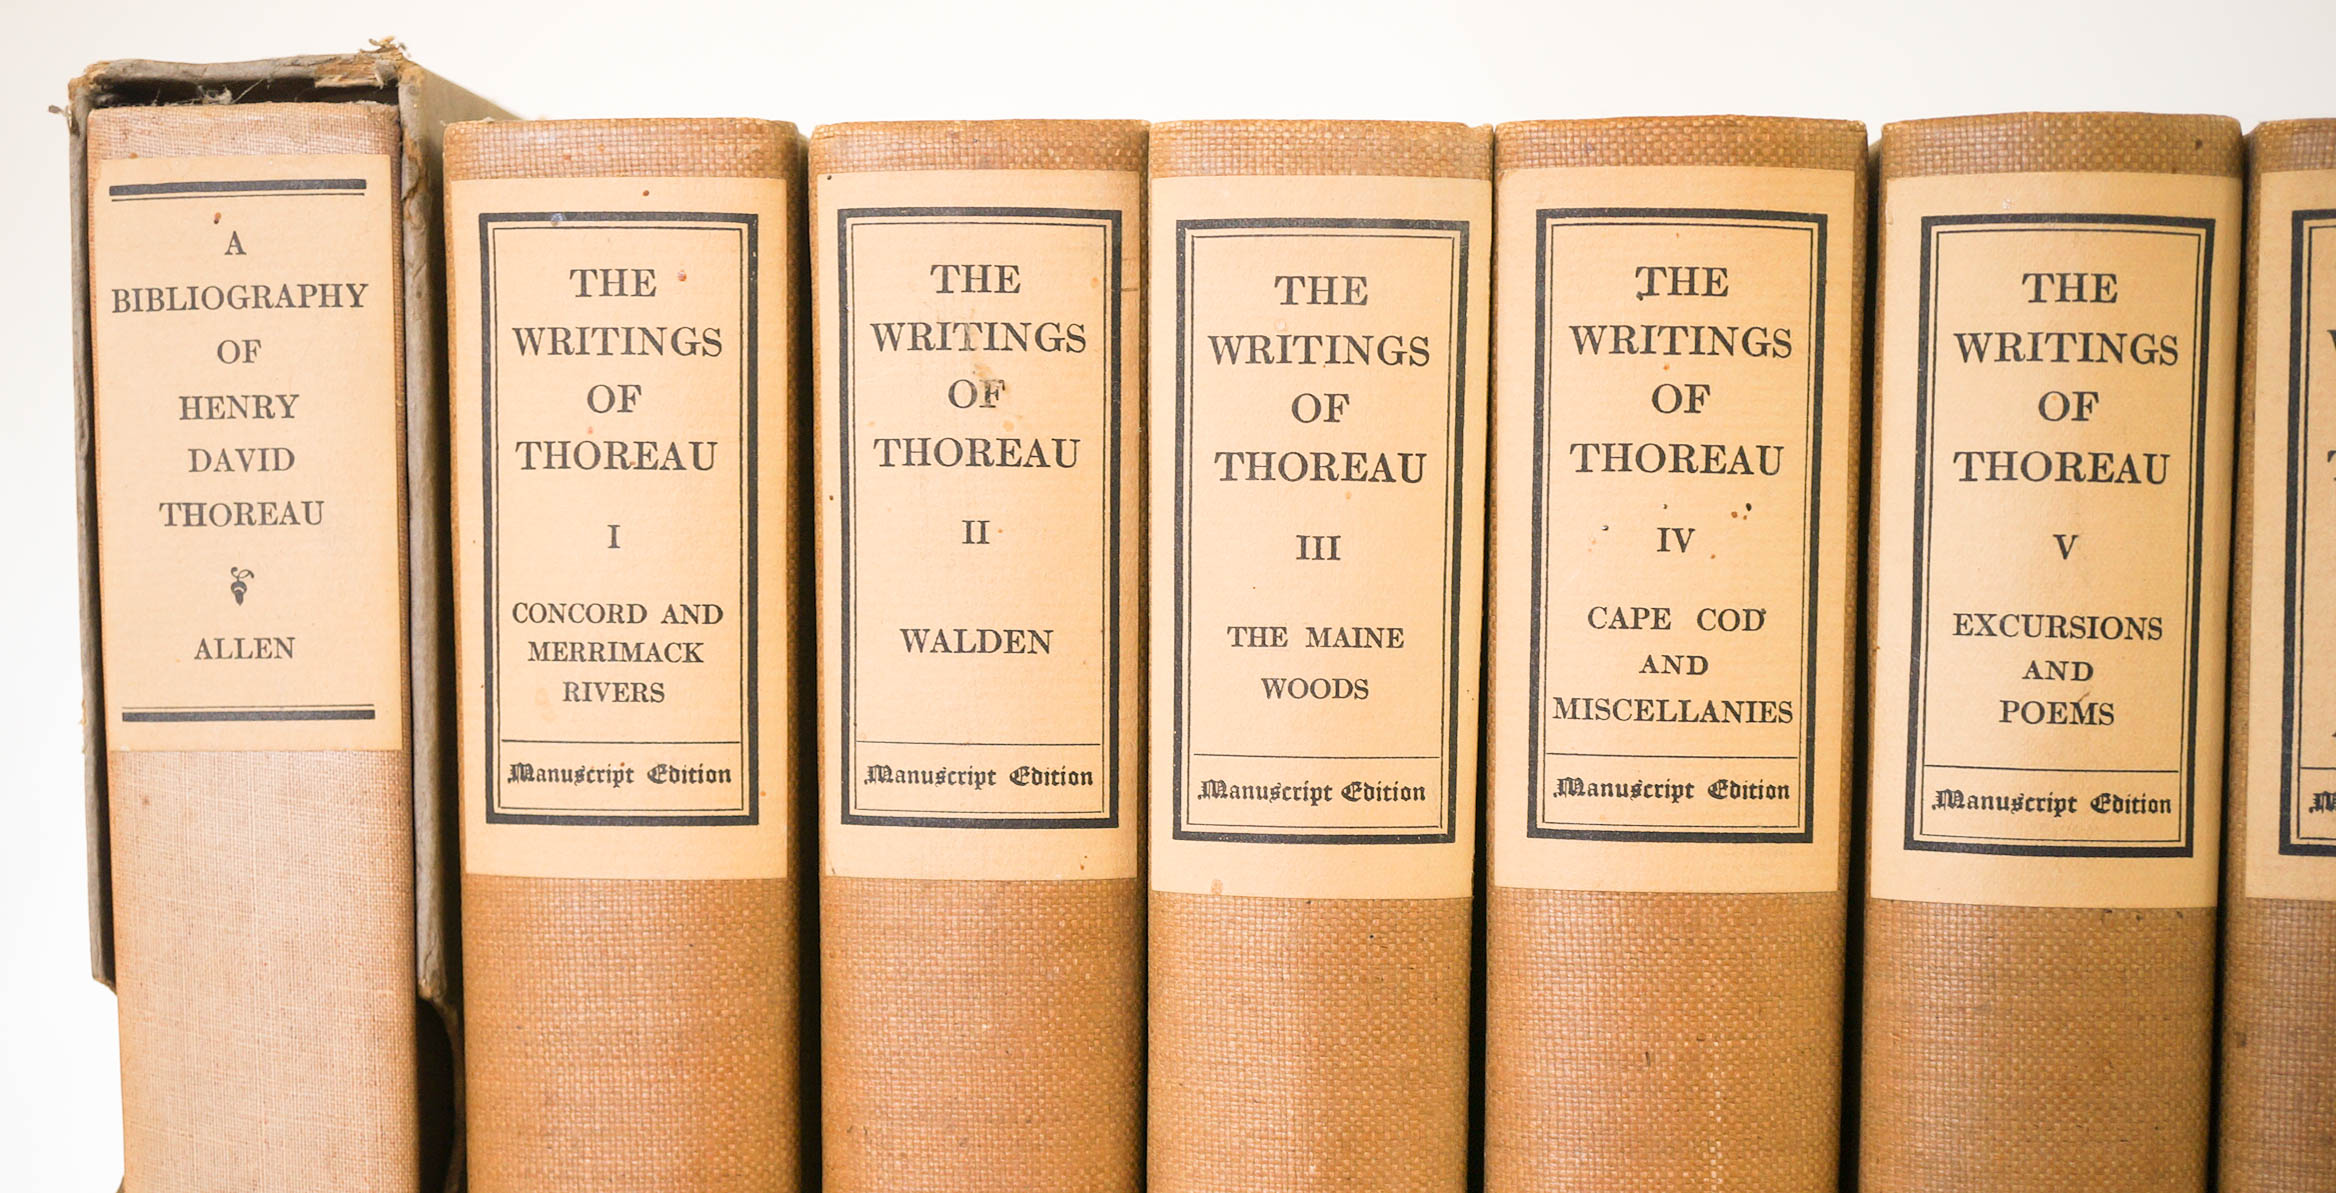 The Writings of Thoreau (20 Volumes) 1906